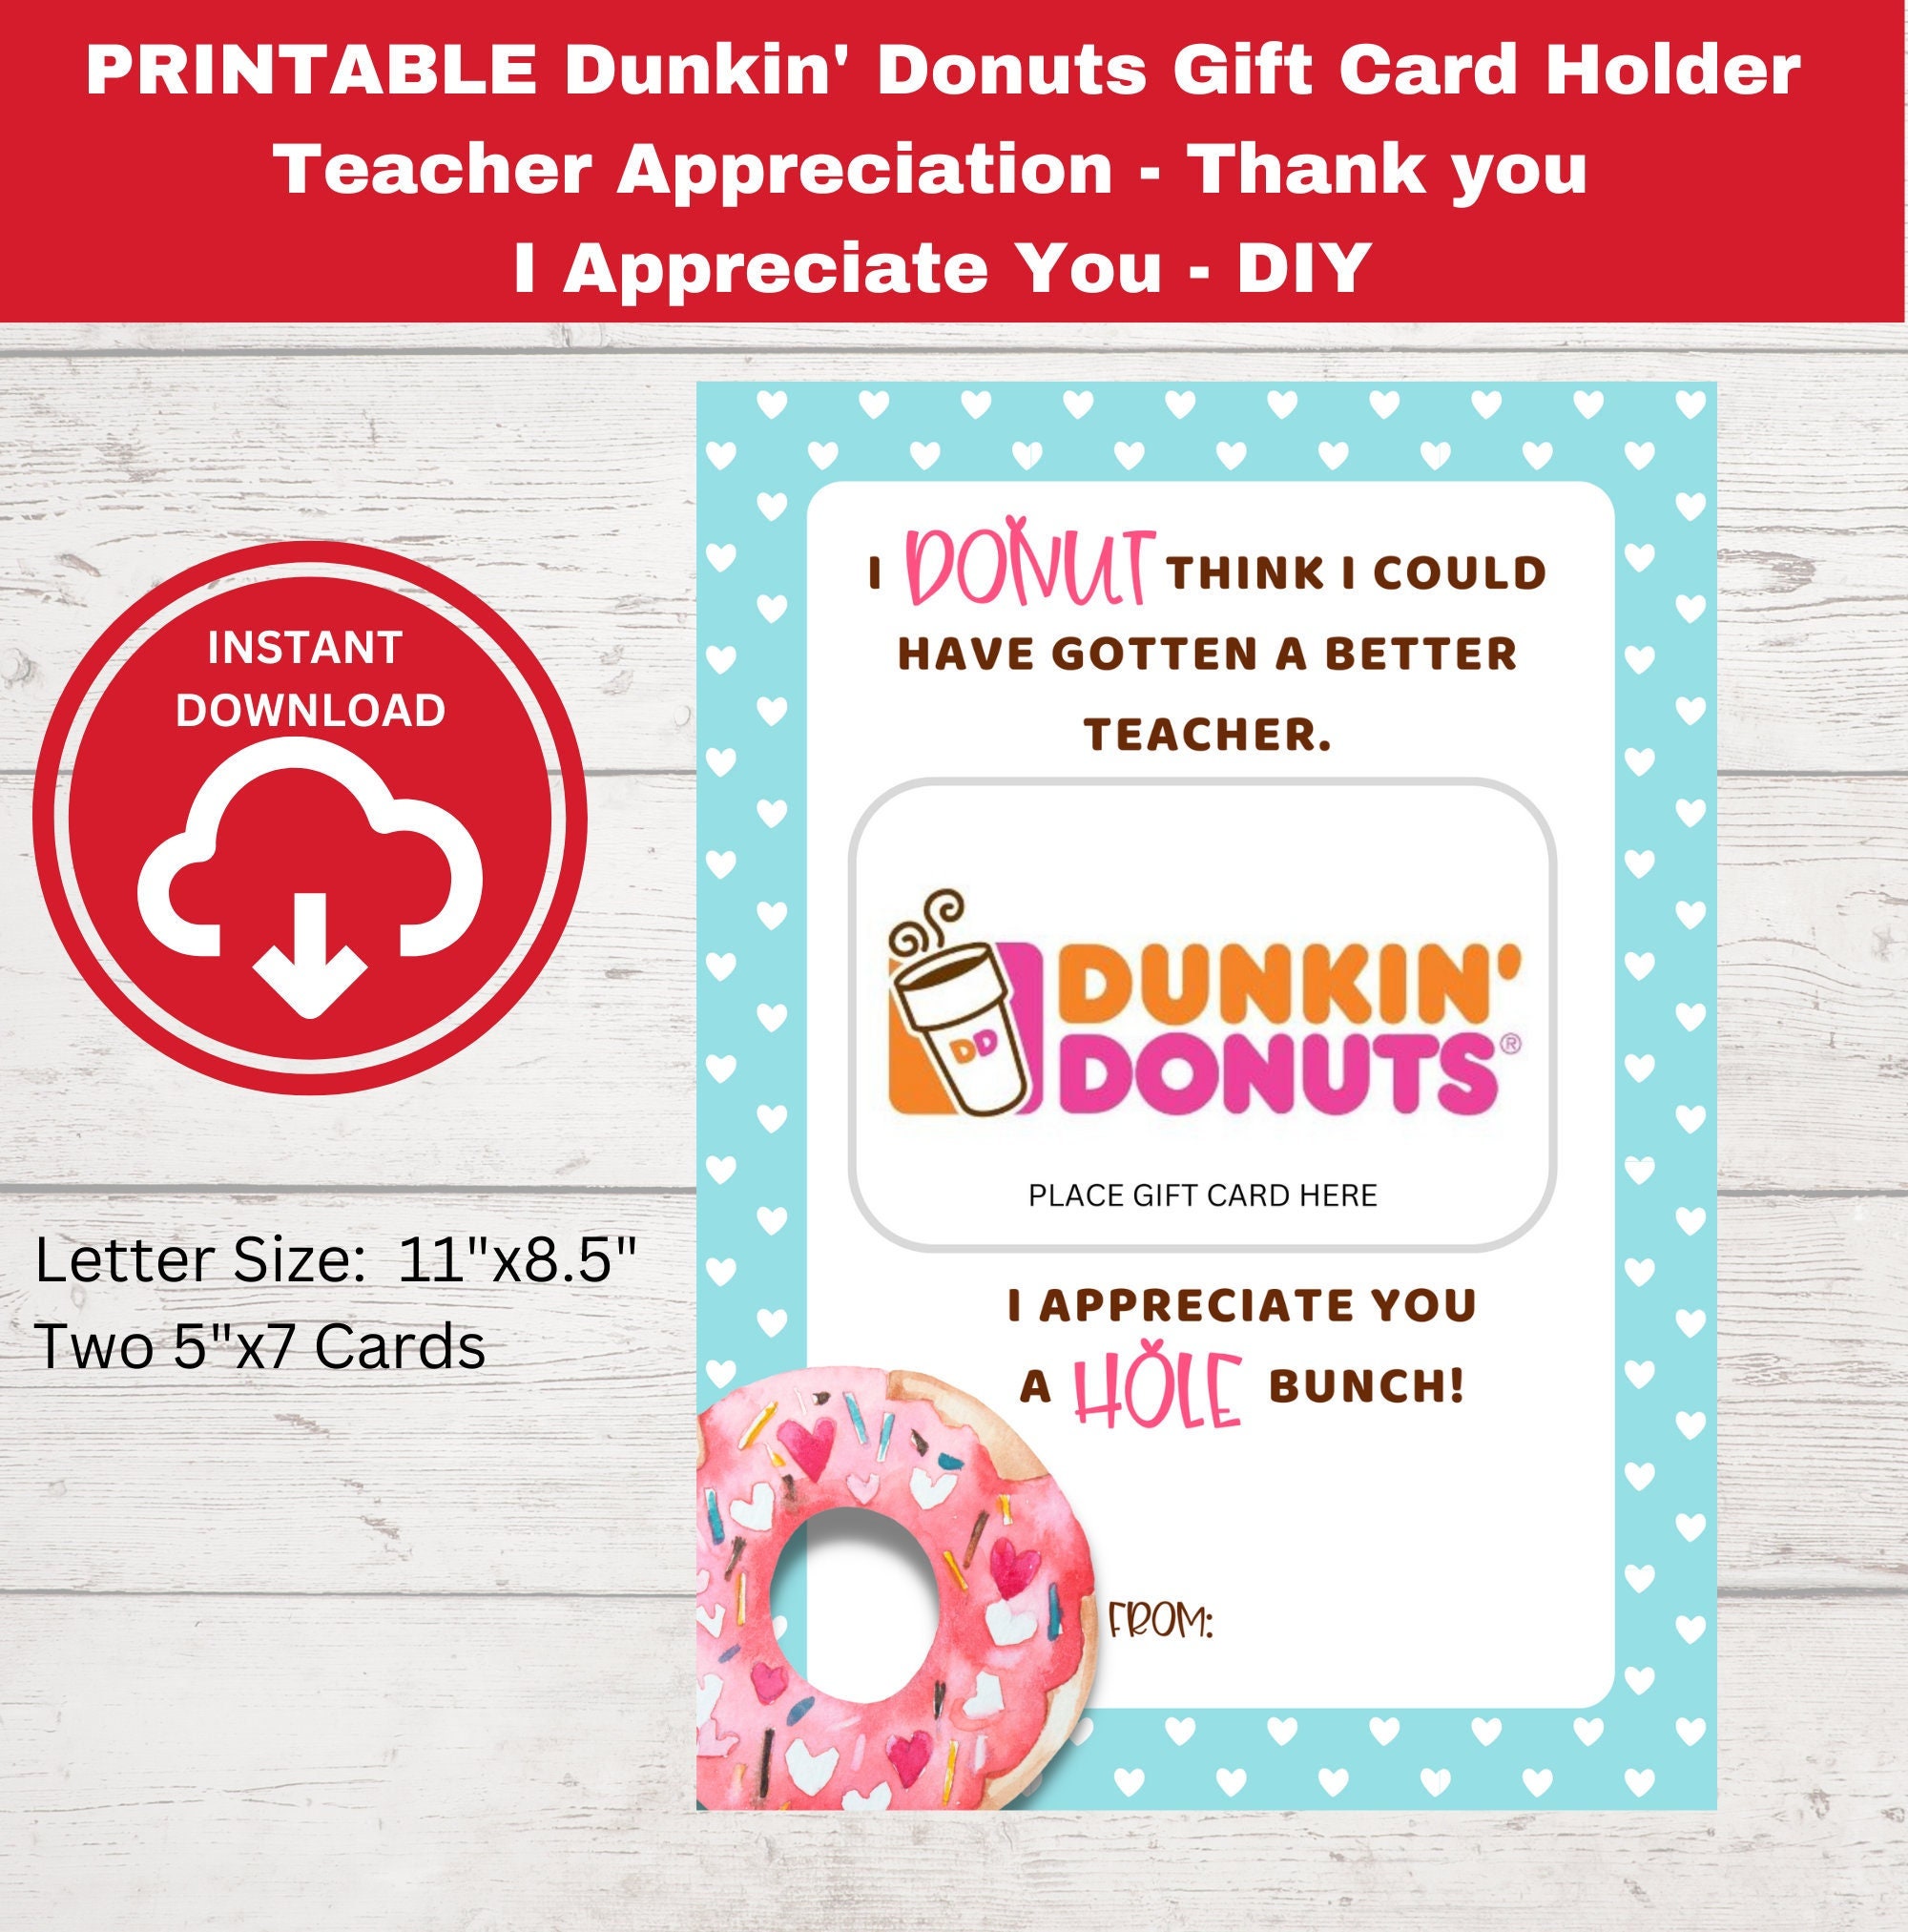 PRINTABLE Teacher Appreciation Dunkin' Donuts Gift Card Holder Thank